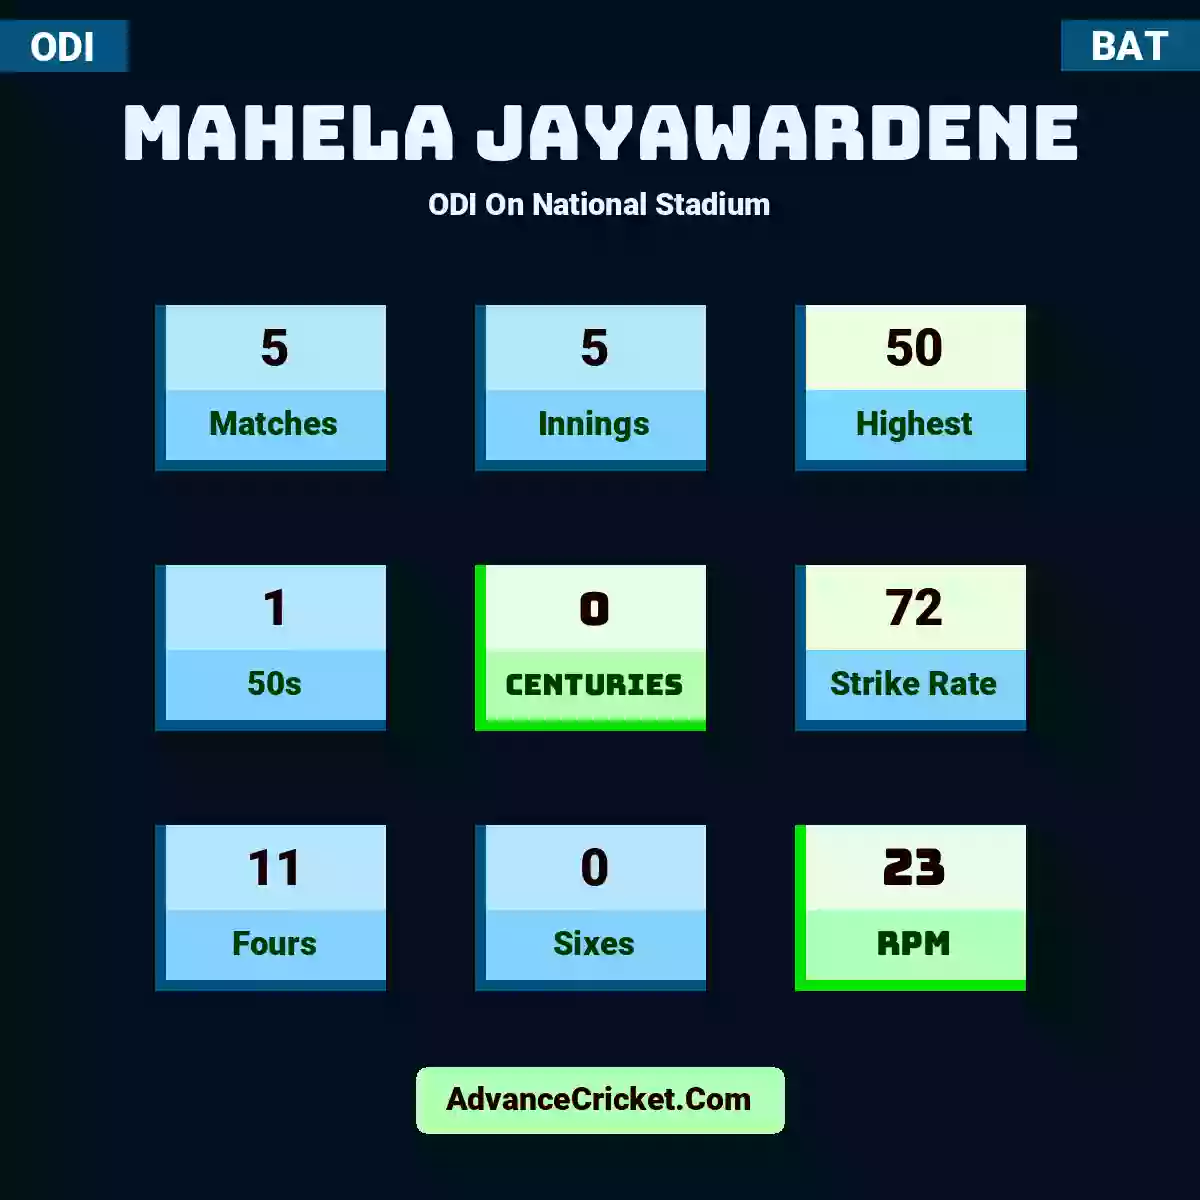 Mahela Jayawardene ODI  On National Stadium, Mahela Jayawardene played 5 matches, scored 50 runs as highest, 1 half-centuries, and 0 centuries, with a strike rate of 72. M.Jayawardene hit 11 fours and 0 sixes, with an RPM of 23.